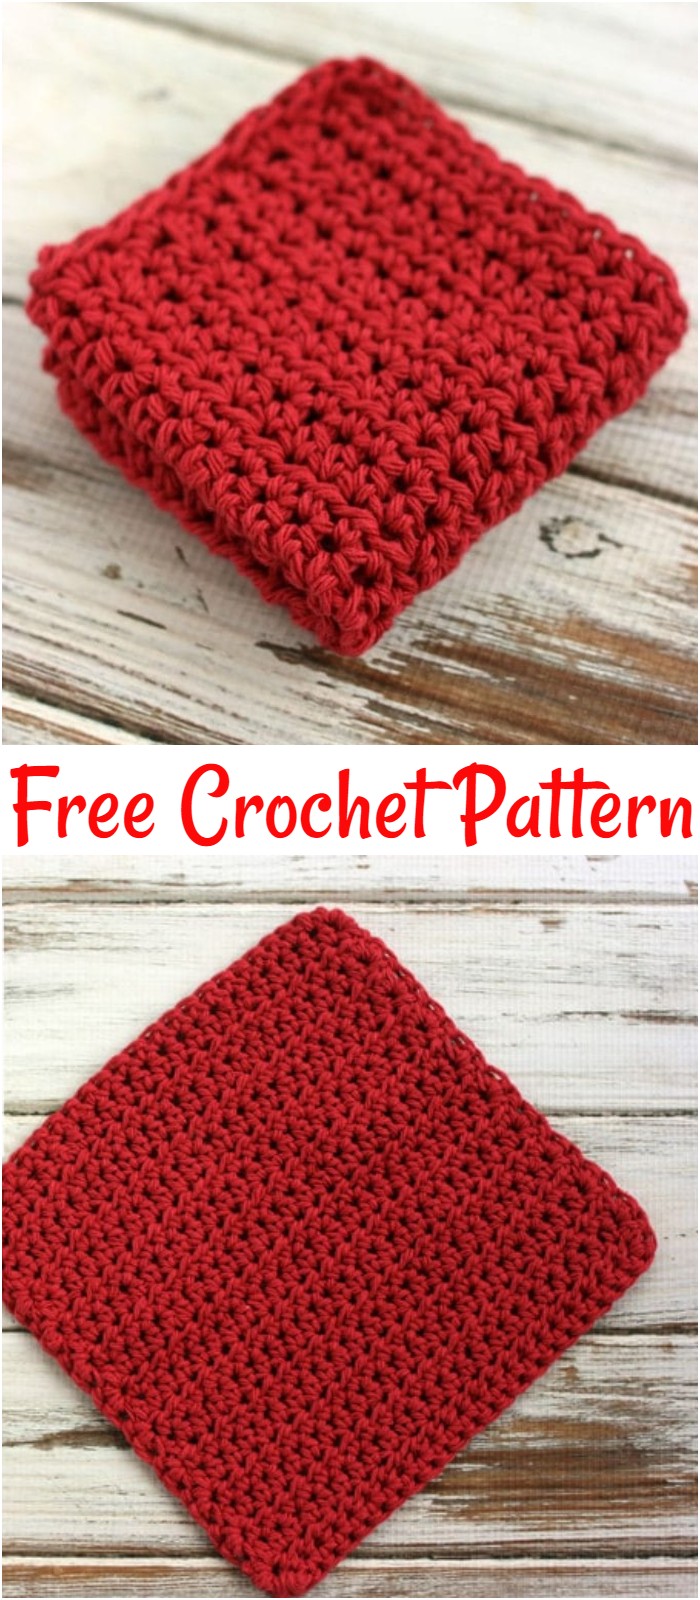 Half Double Crochet Dishcloth Pattern